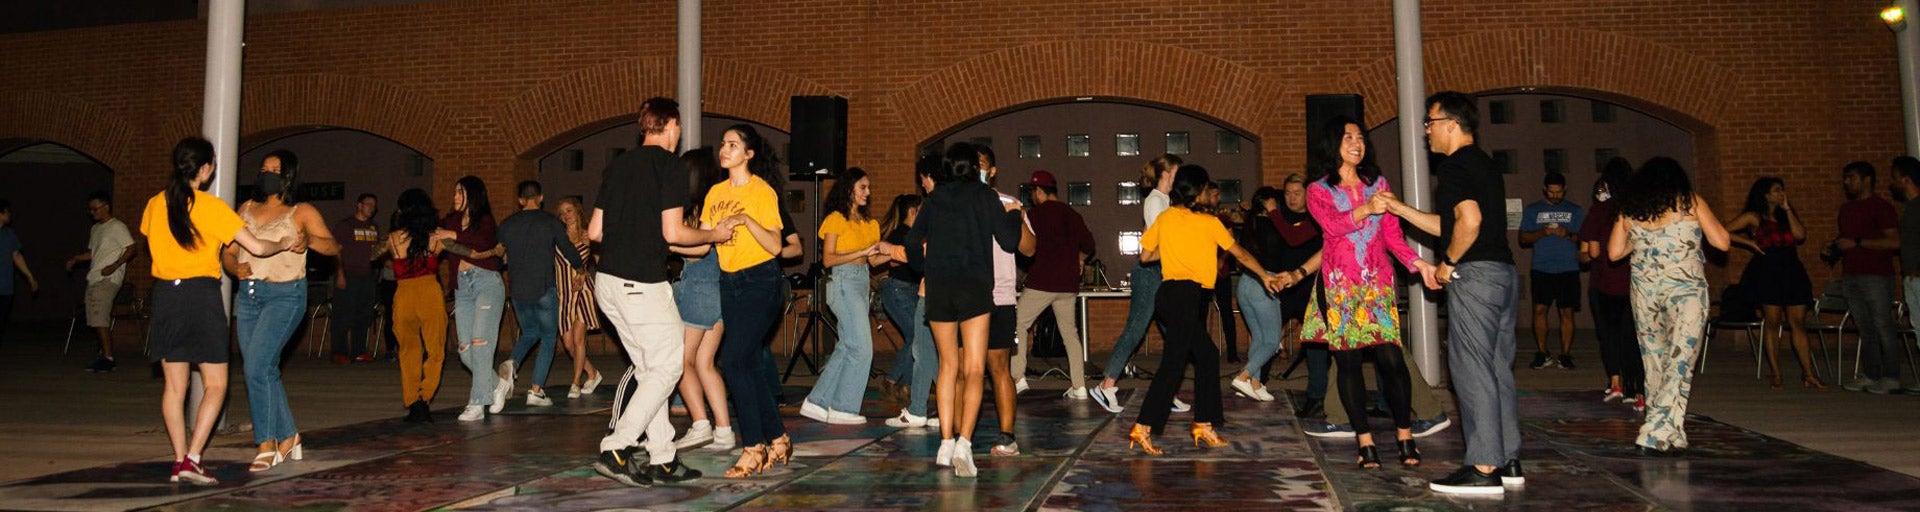 latin sol group dance